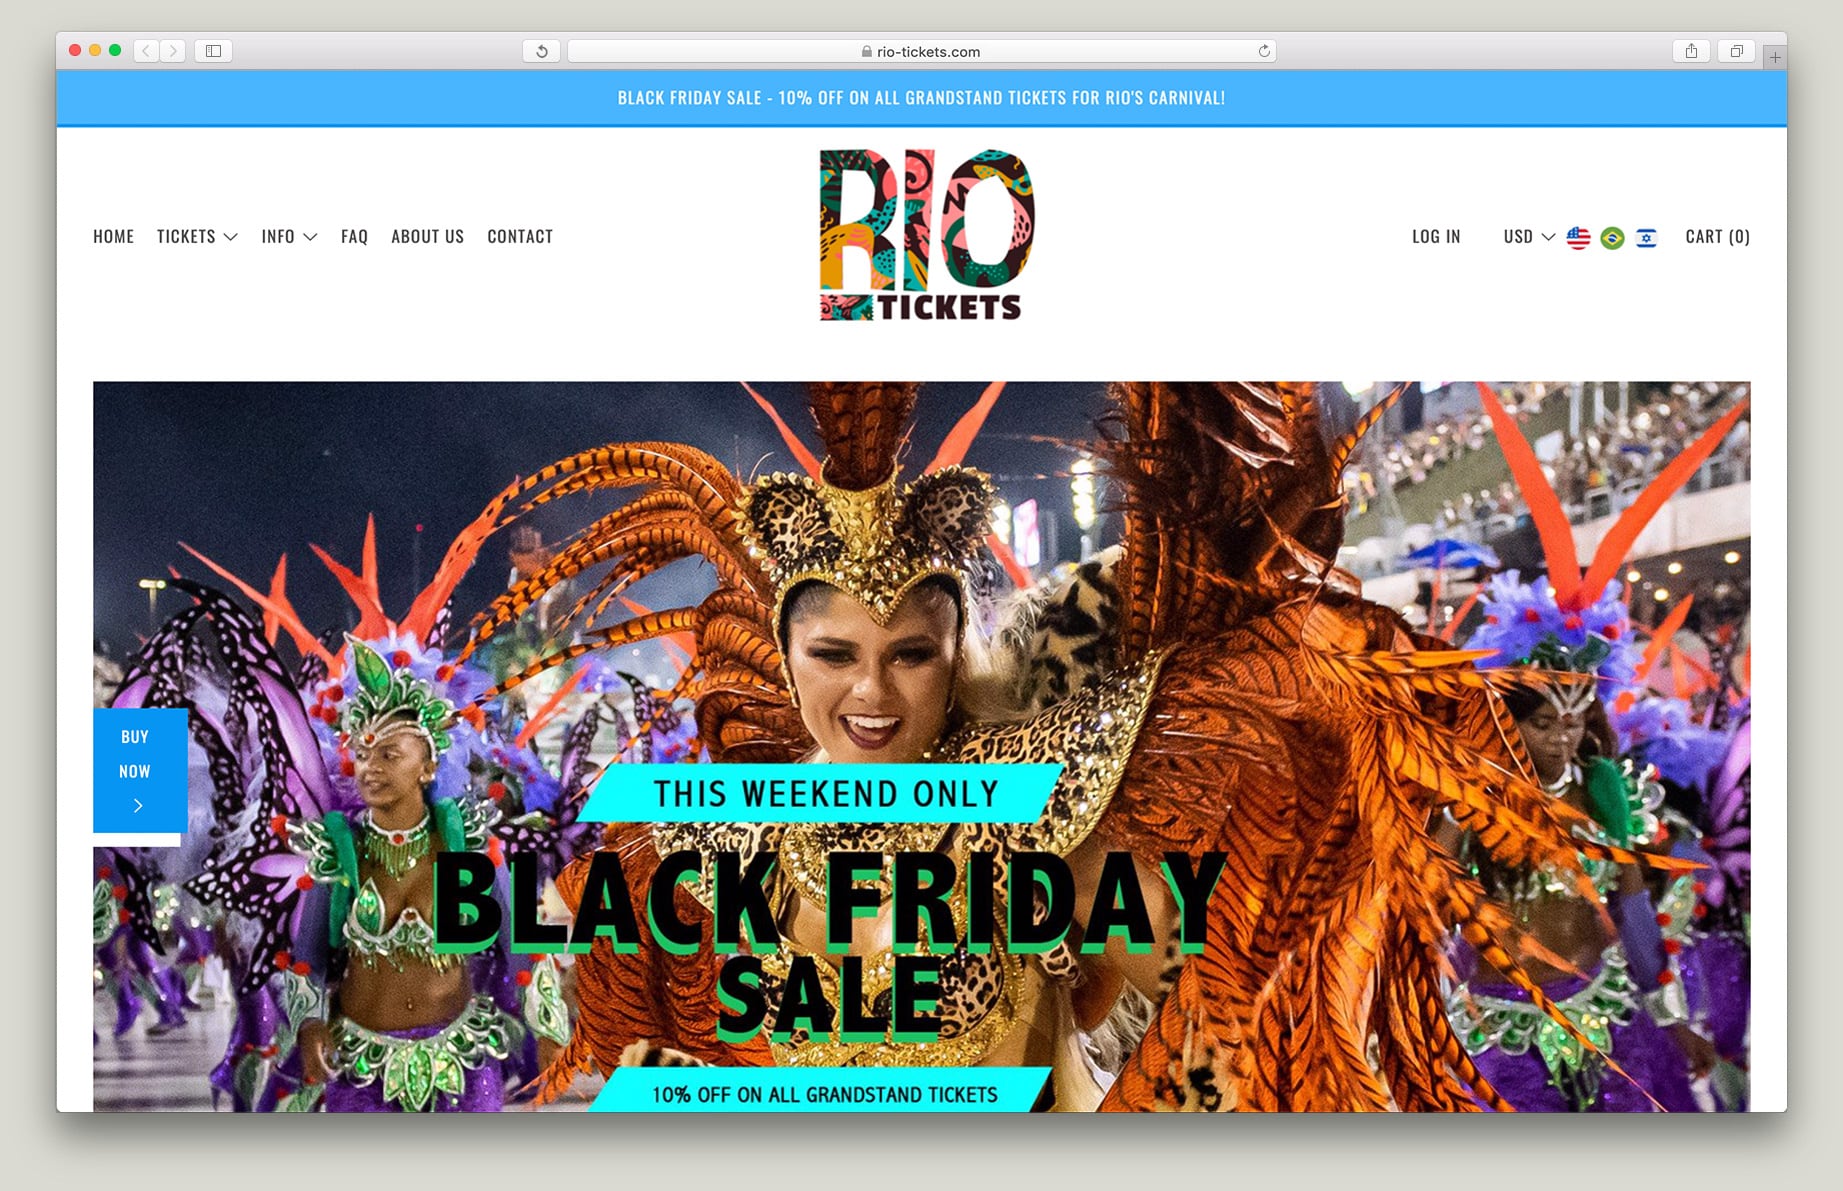 Río Tickets - Rio Carnival Ticktes